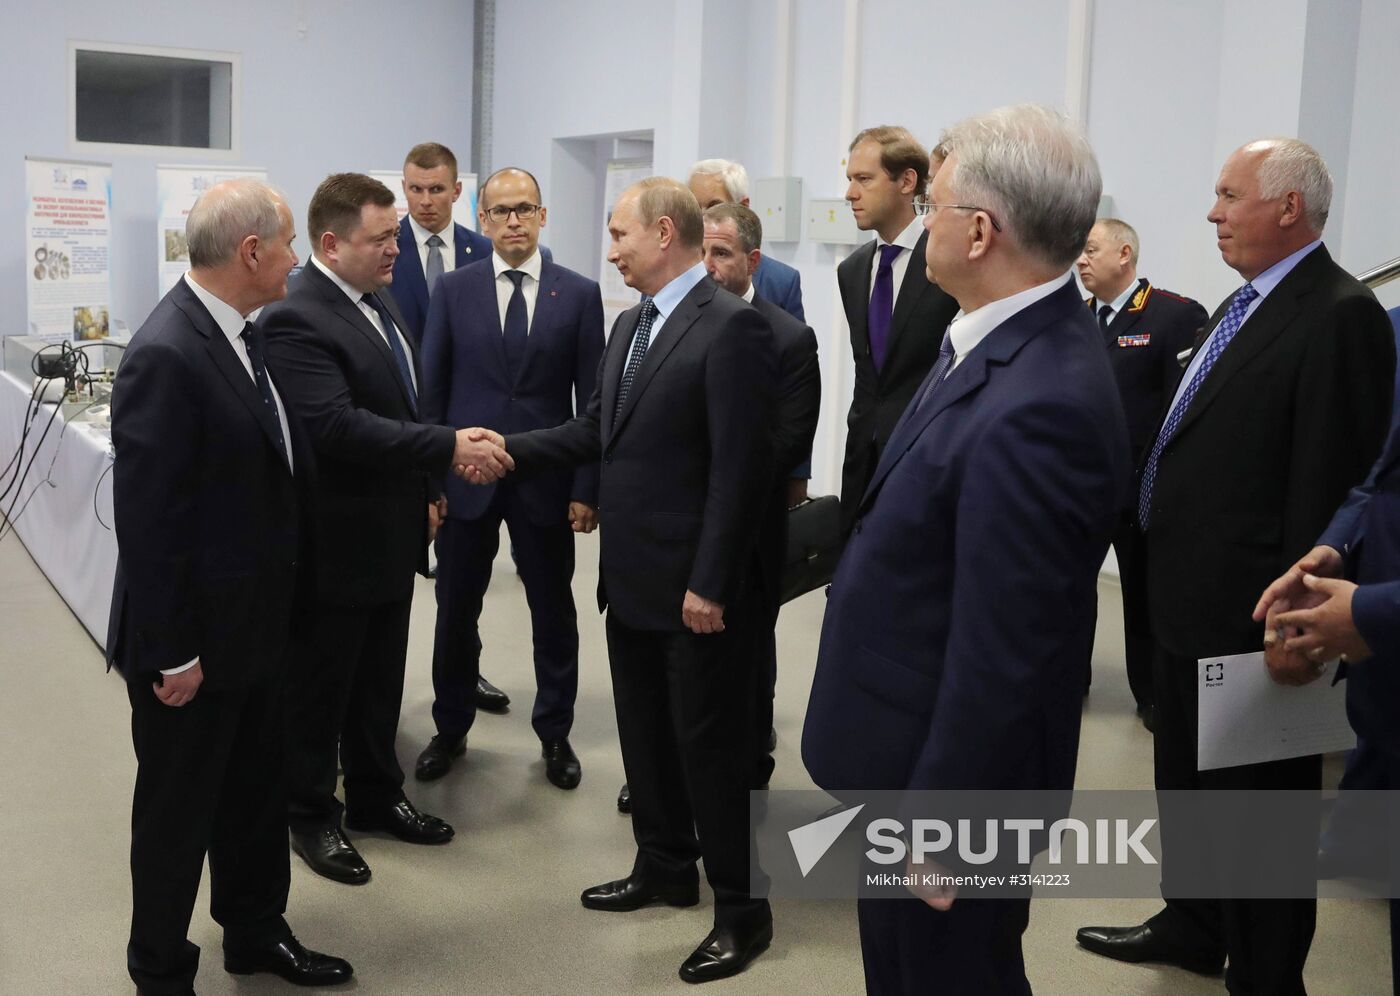 Russian President Vladimir Putin's working trip to Udmurtia